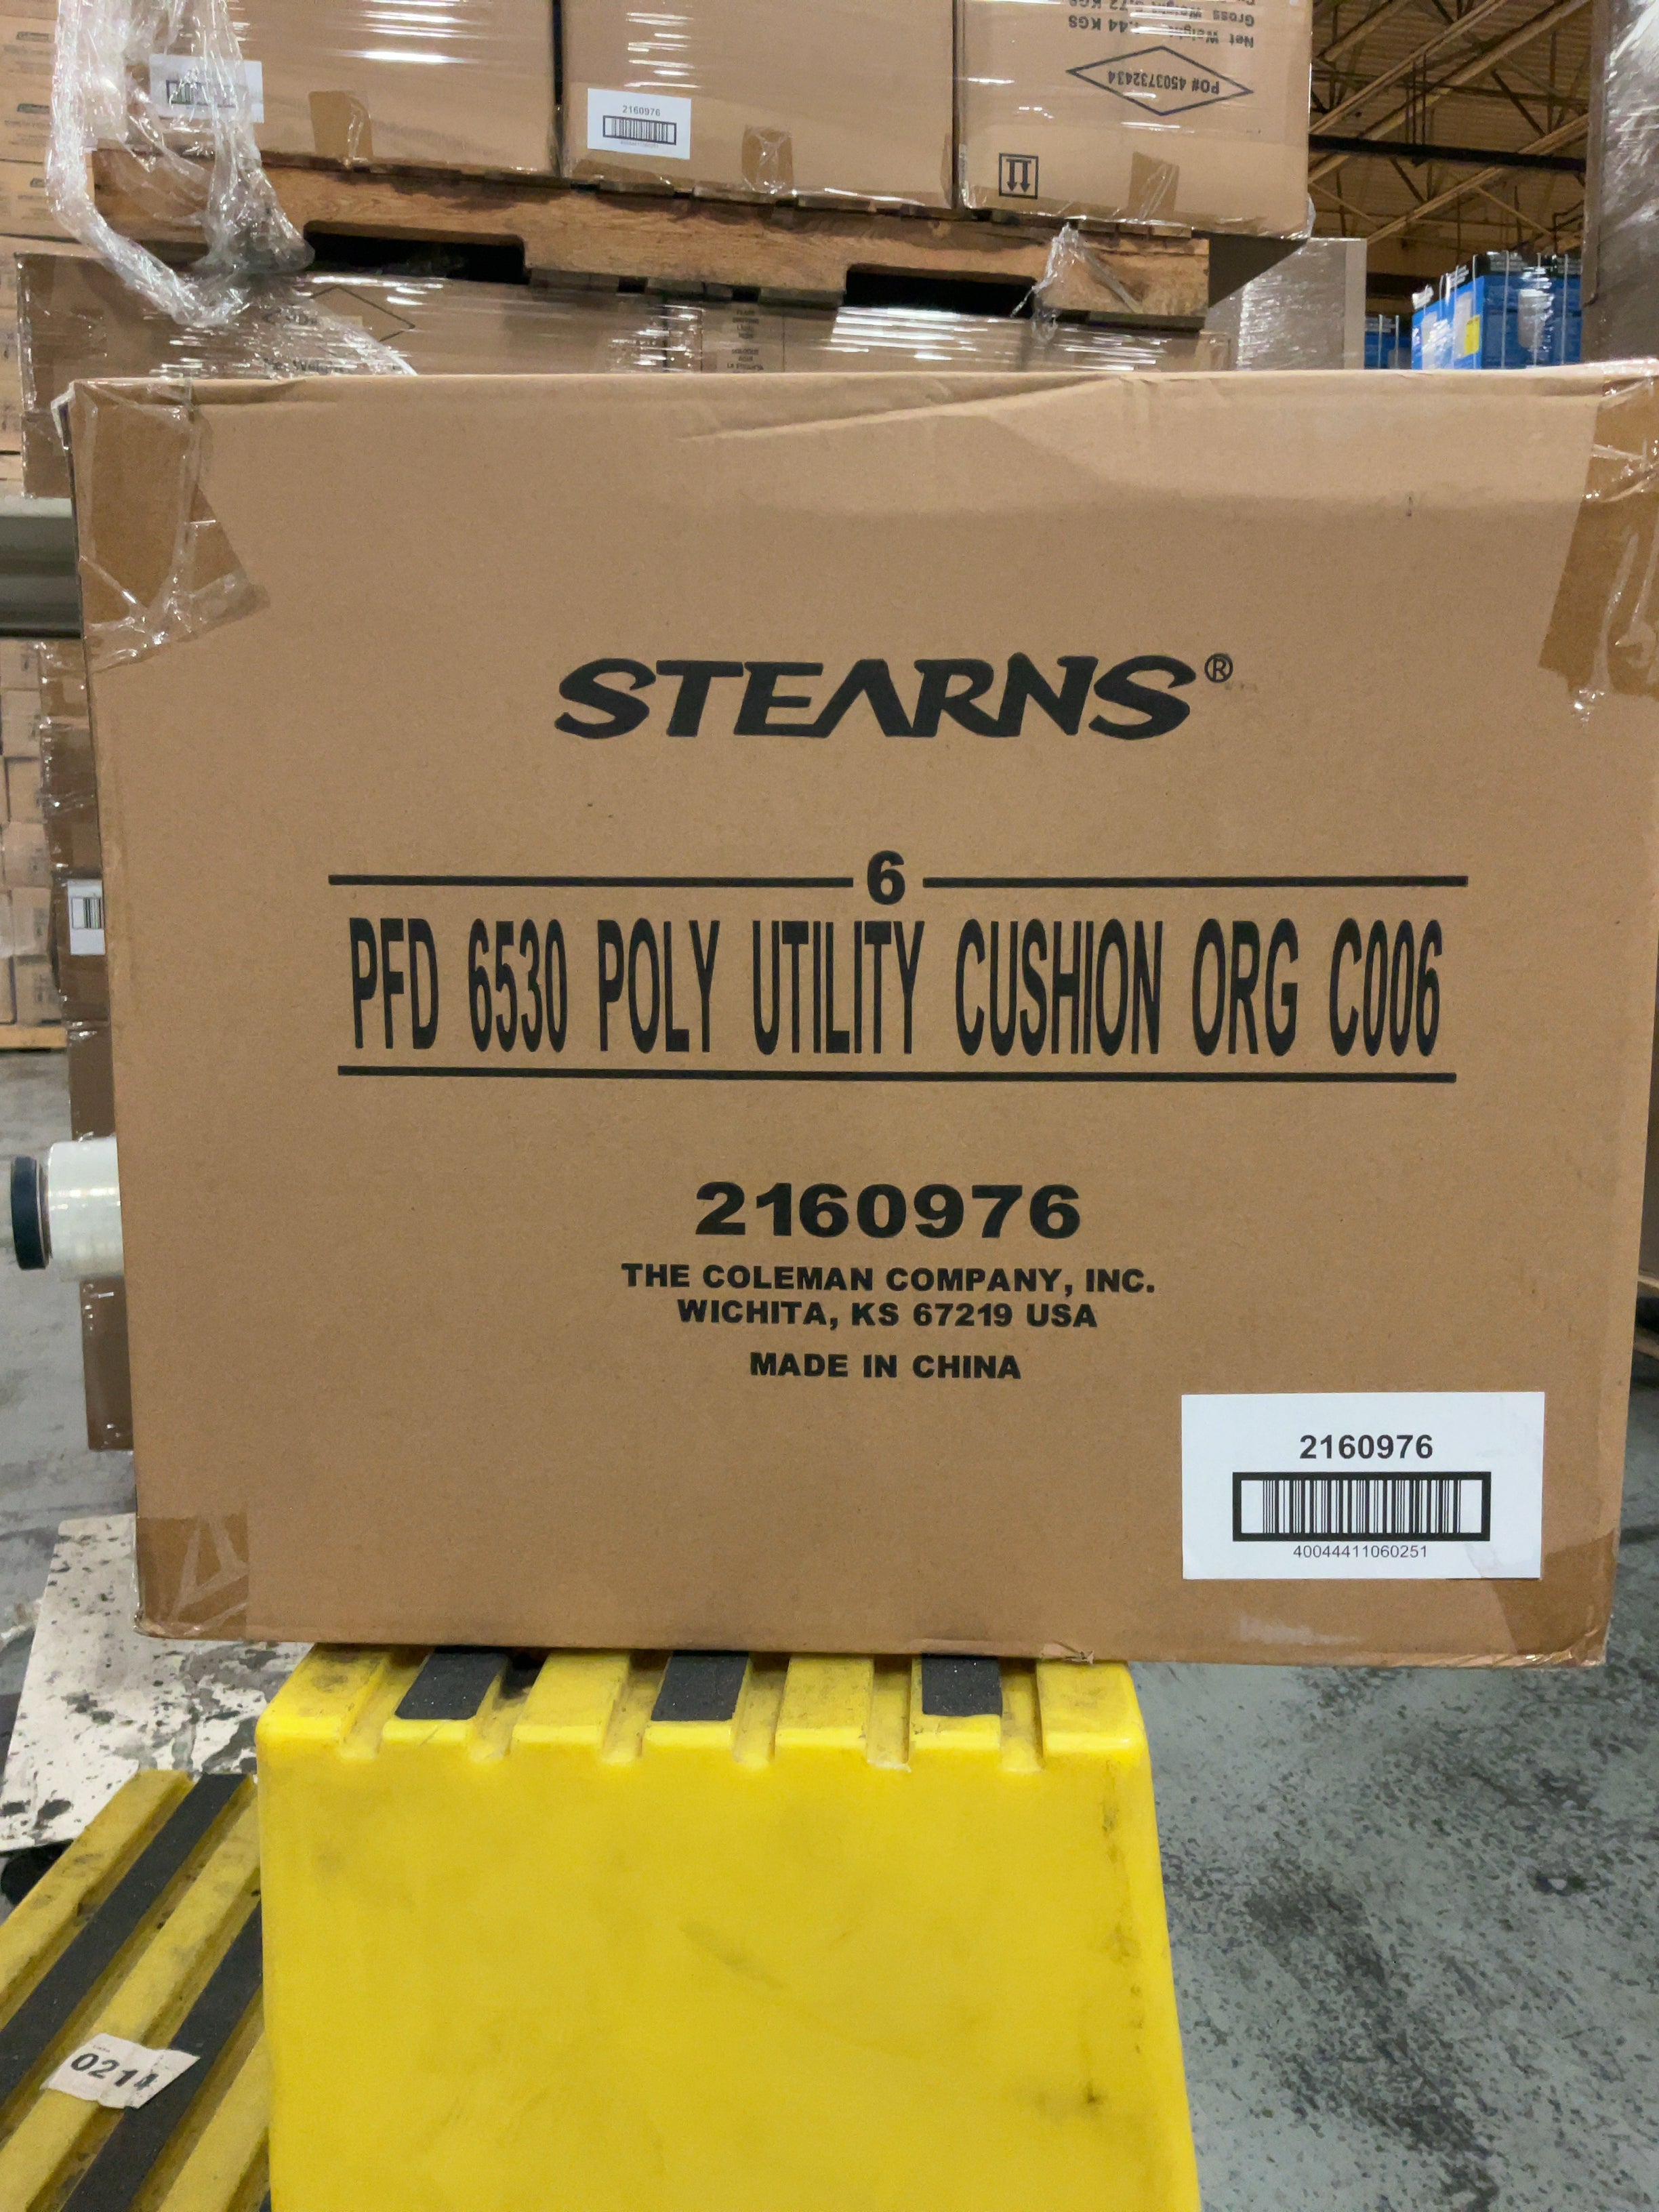 Stearns PFD 6530 Poly Utility Cushion Org C006